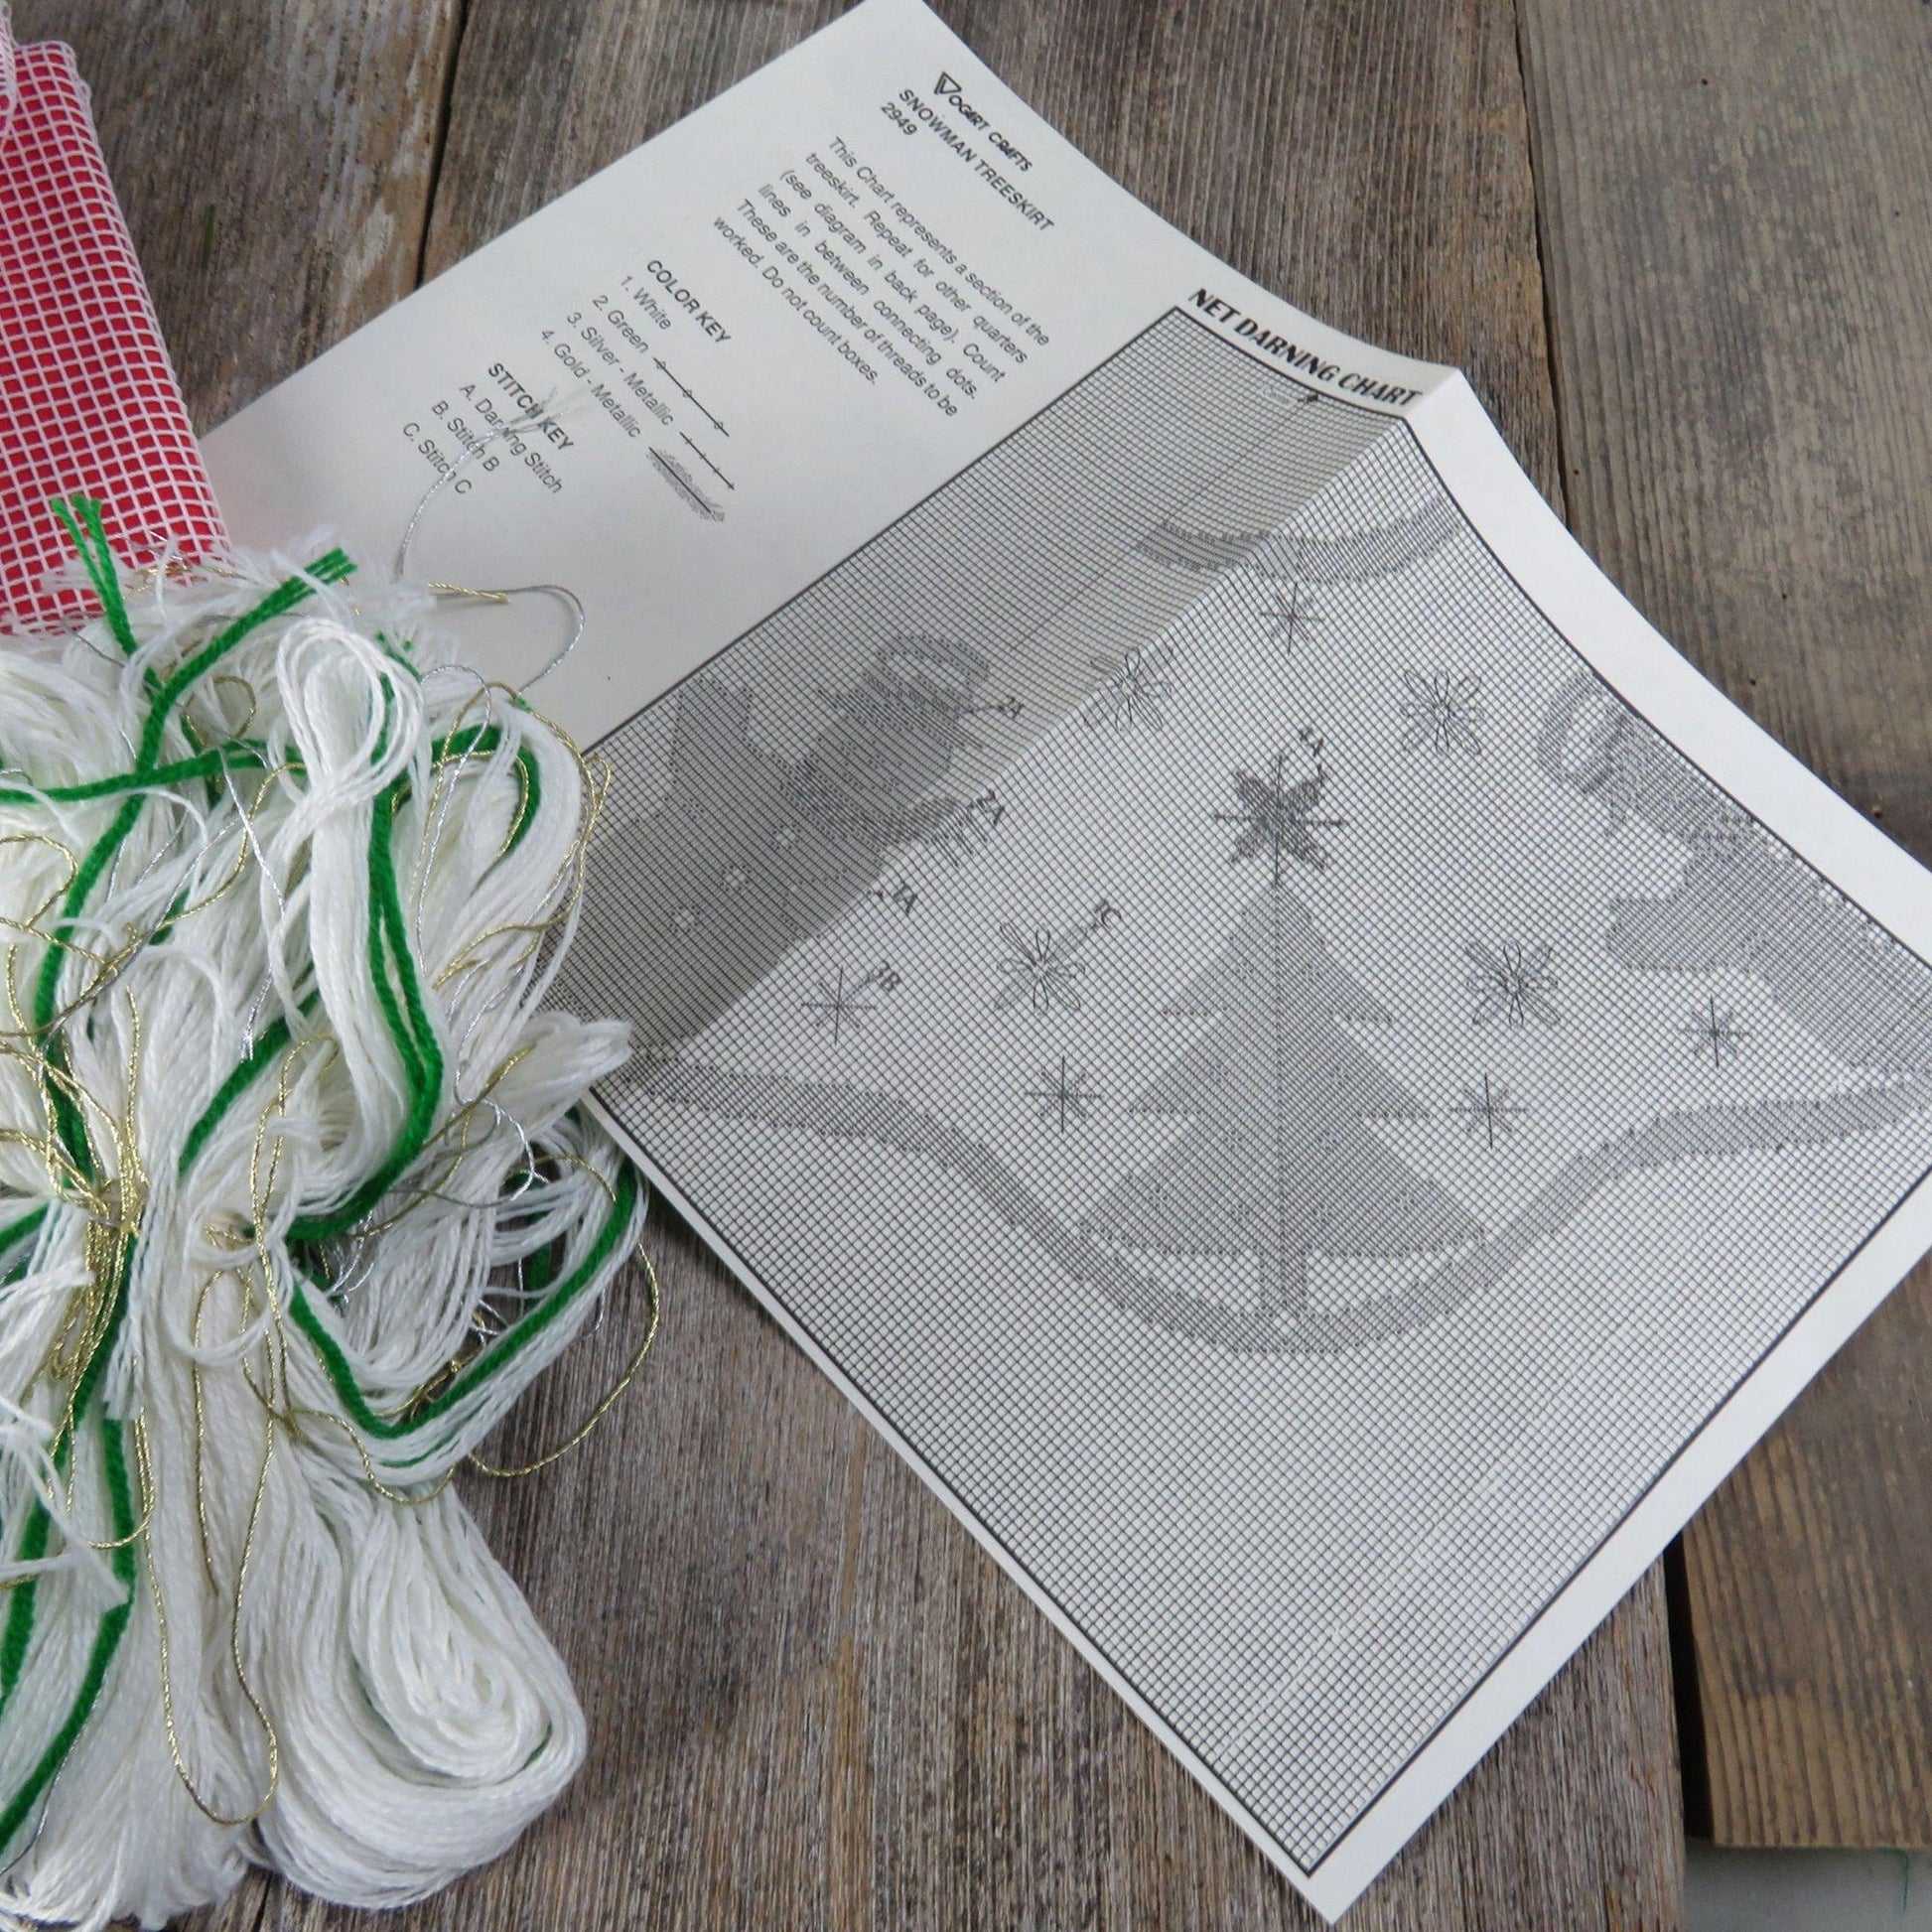 Snowman Christmas Stocking Lace Net Darning Kit Vogart Crafts 2946